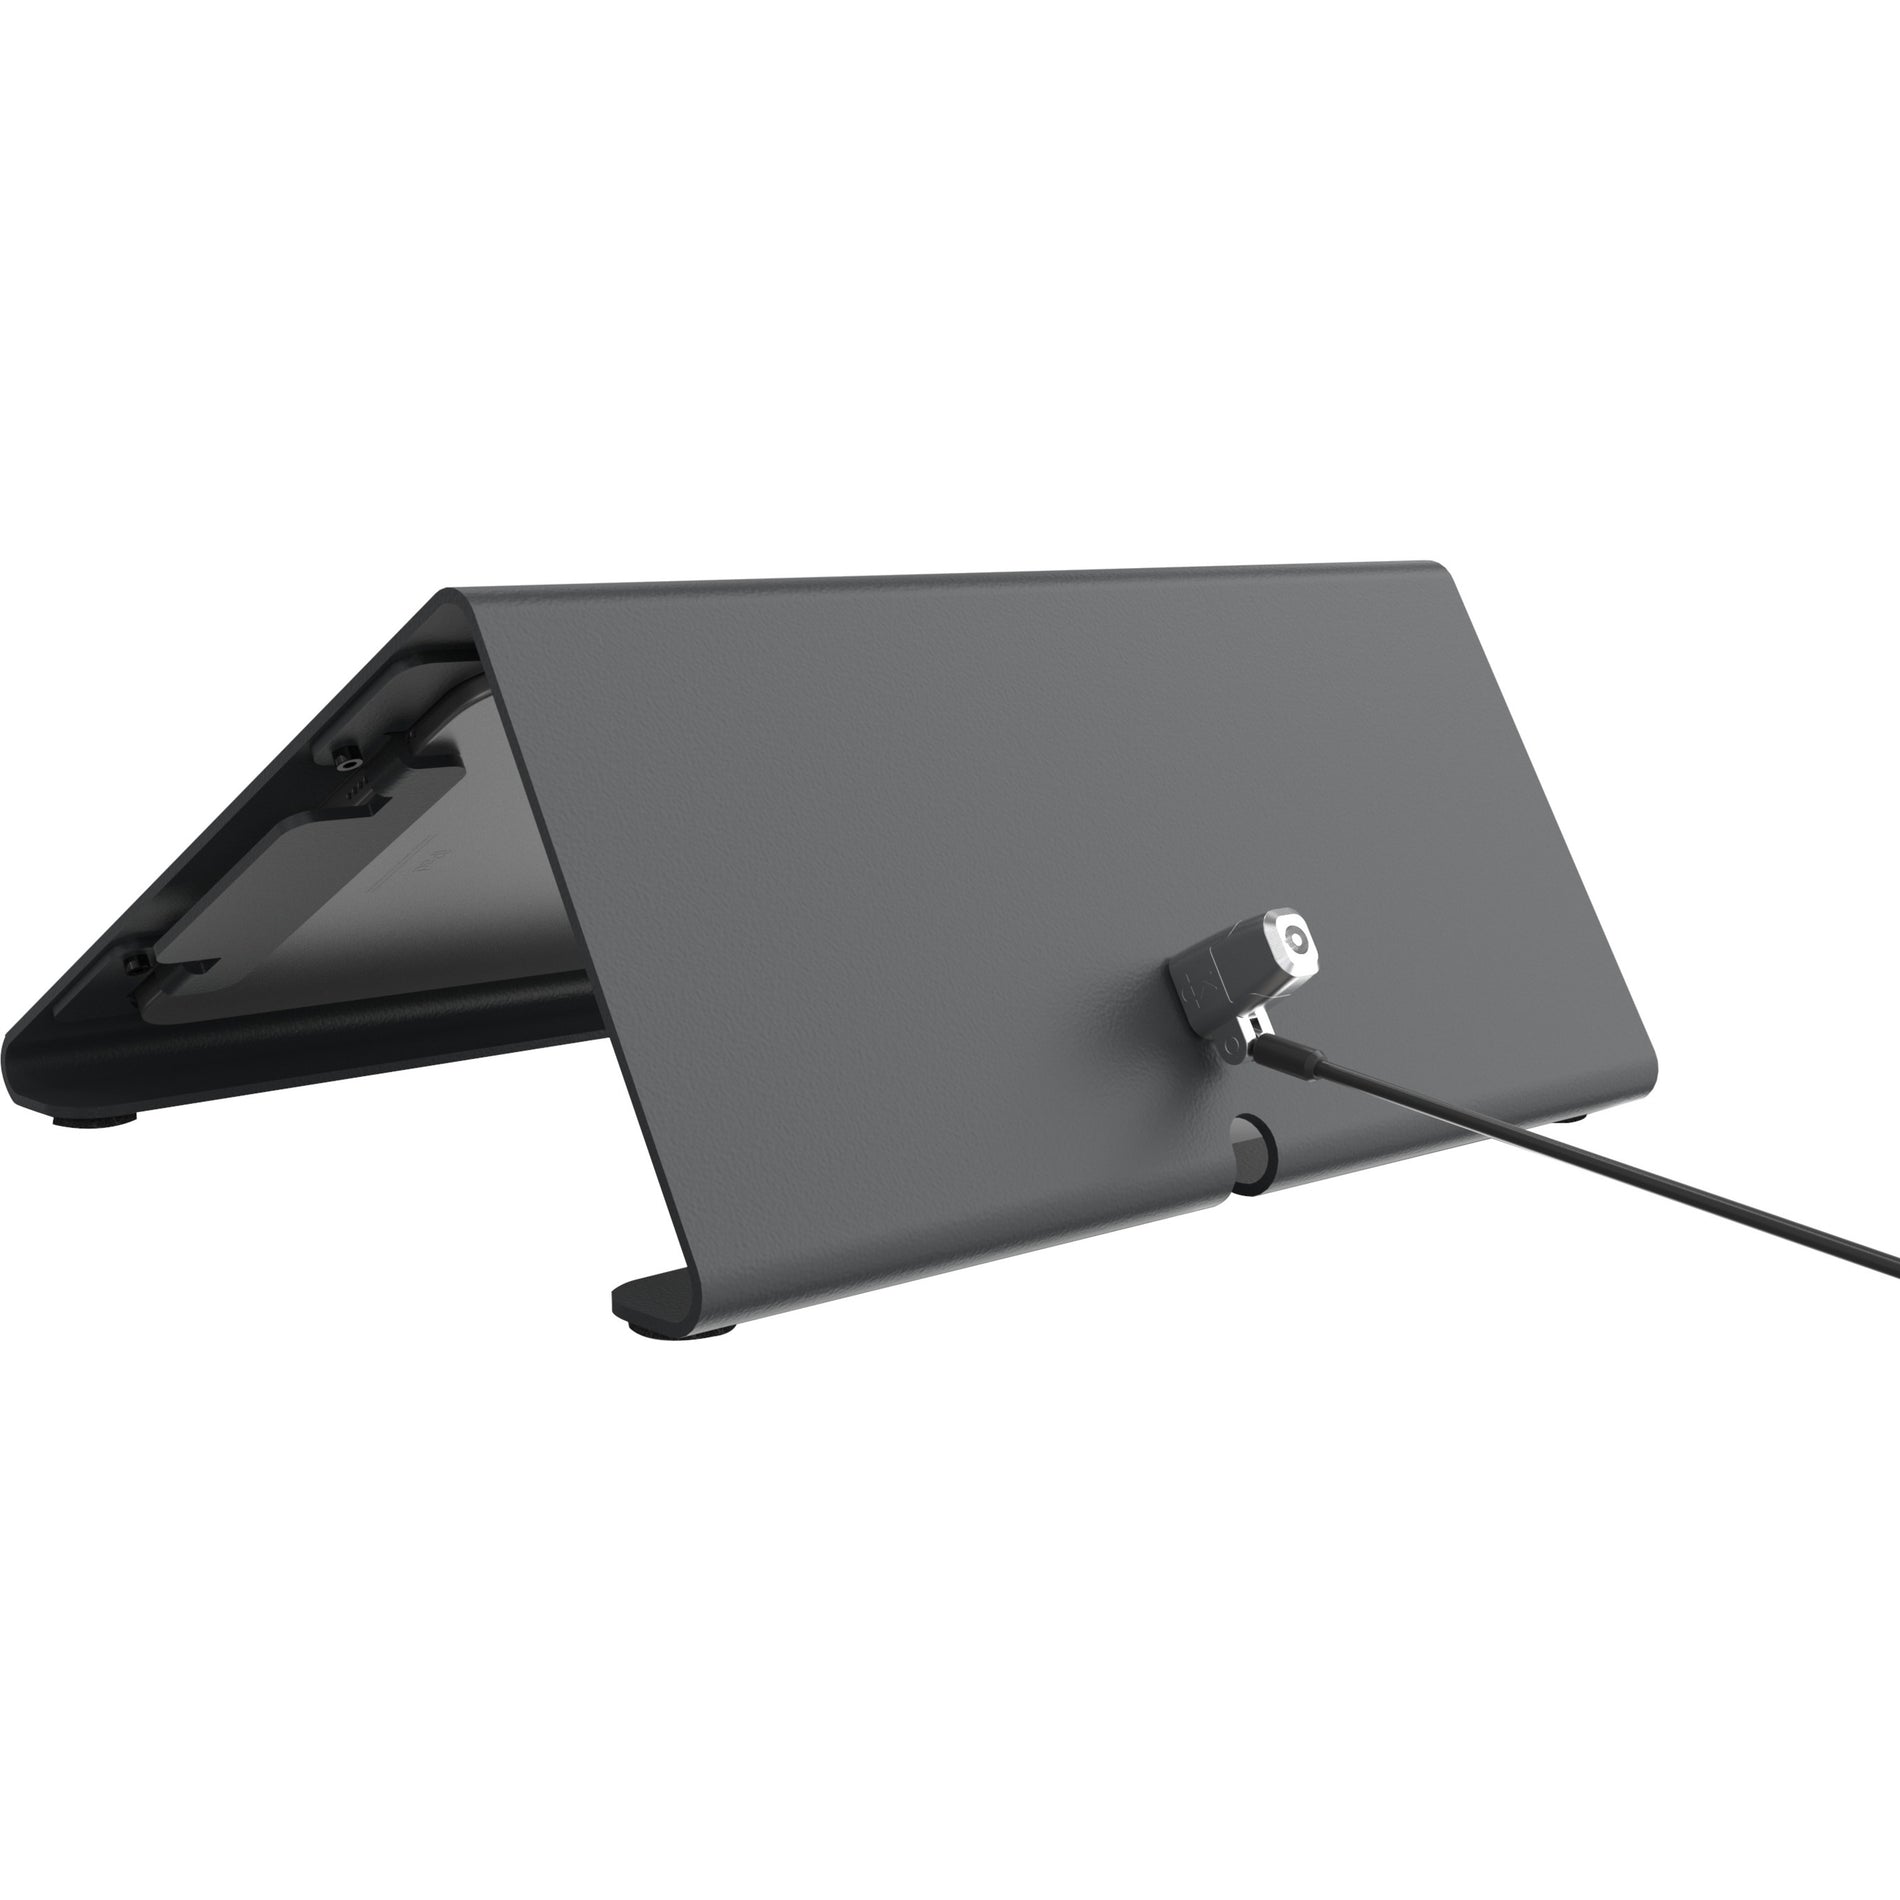 Heckler Design H760-BG Meeting Room Console for iPad 10th Generation - Black Grey, Kensington Slot, Durable, Cable Management